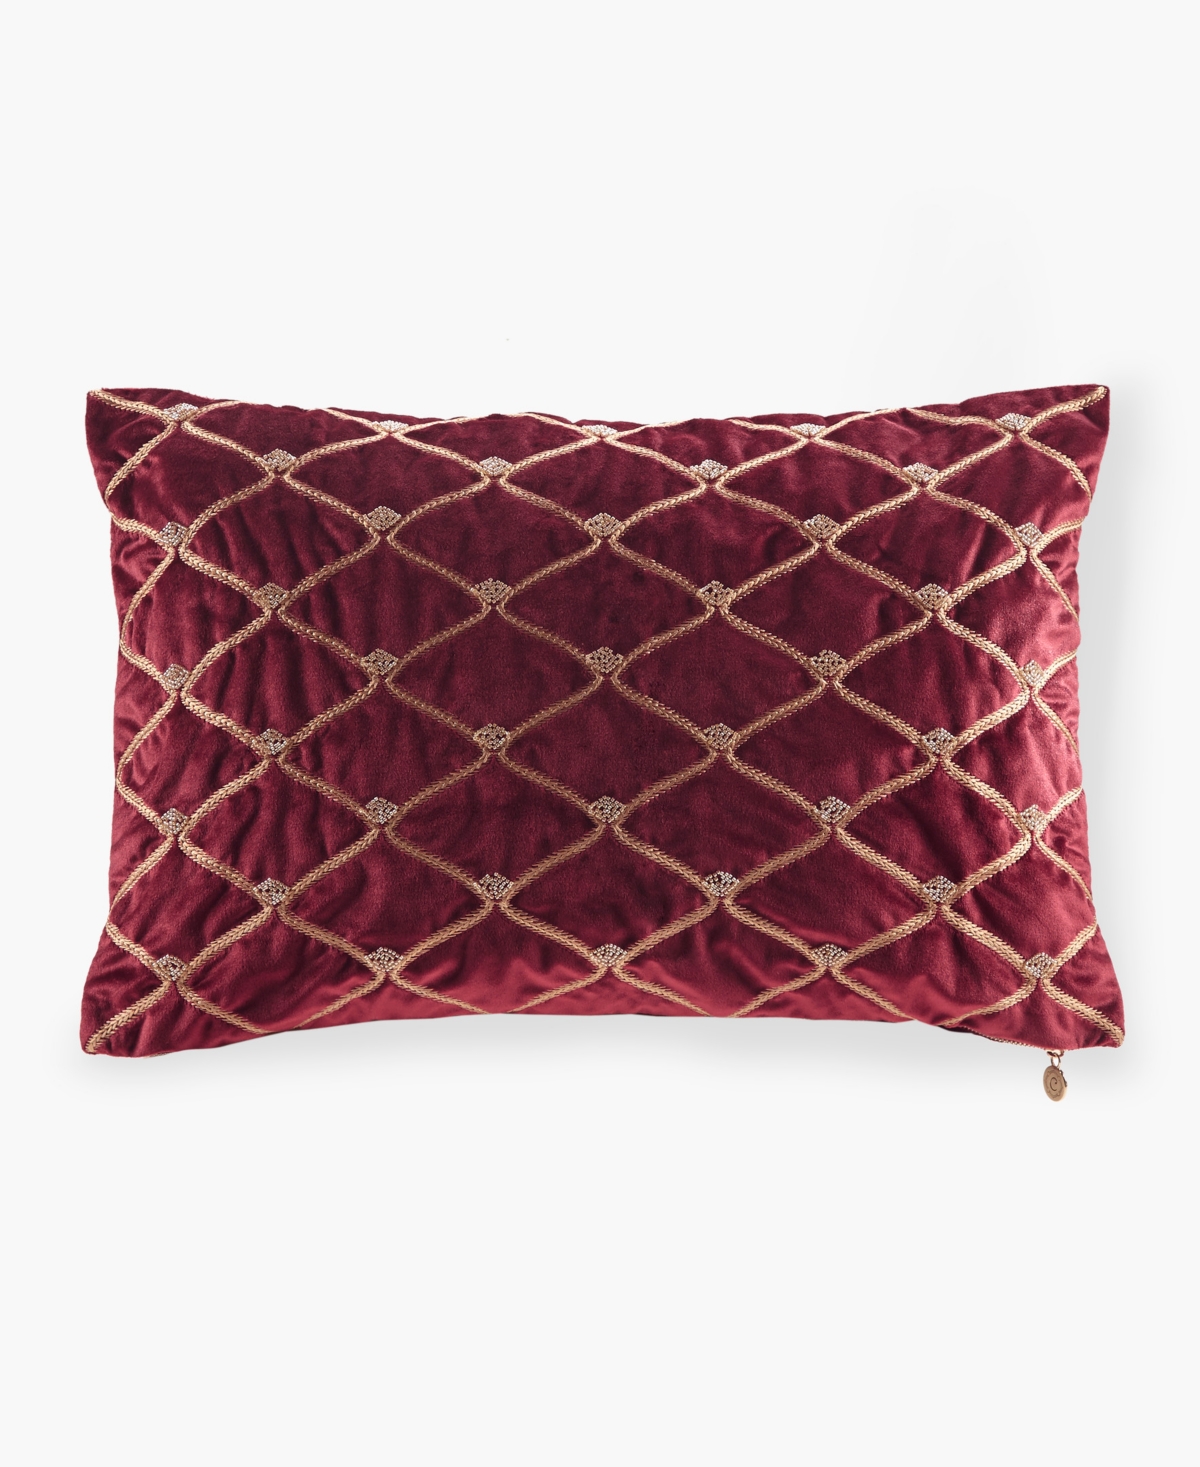 Croscill Aumont Oblong Decorative Pillow, 22" X 15" In Burgundy